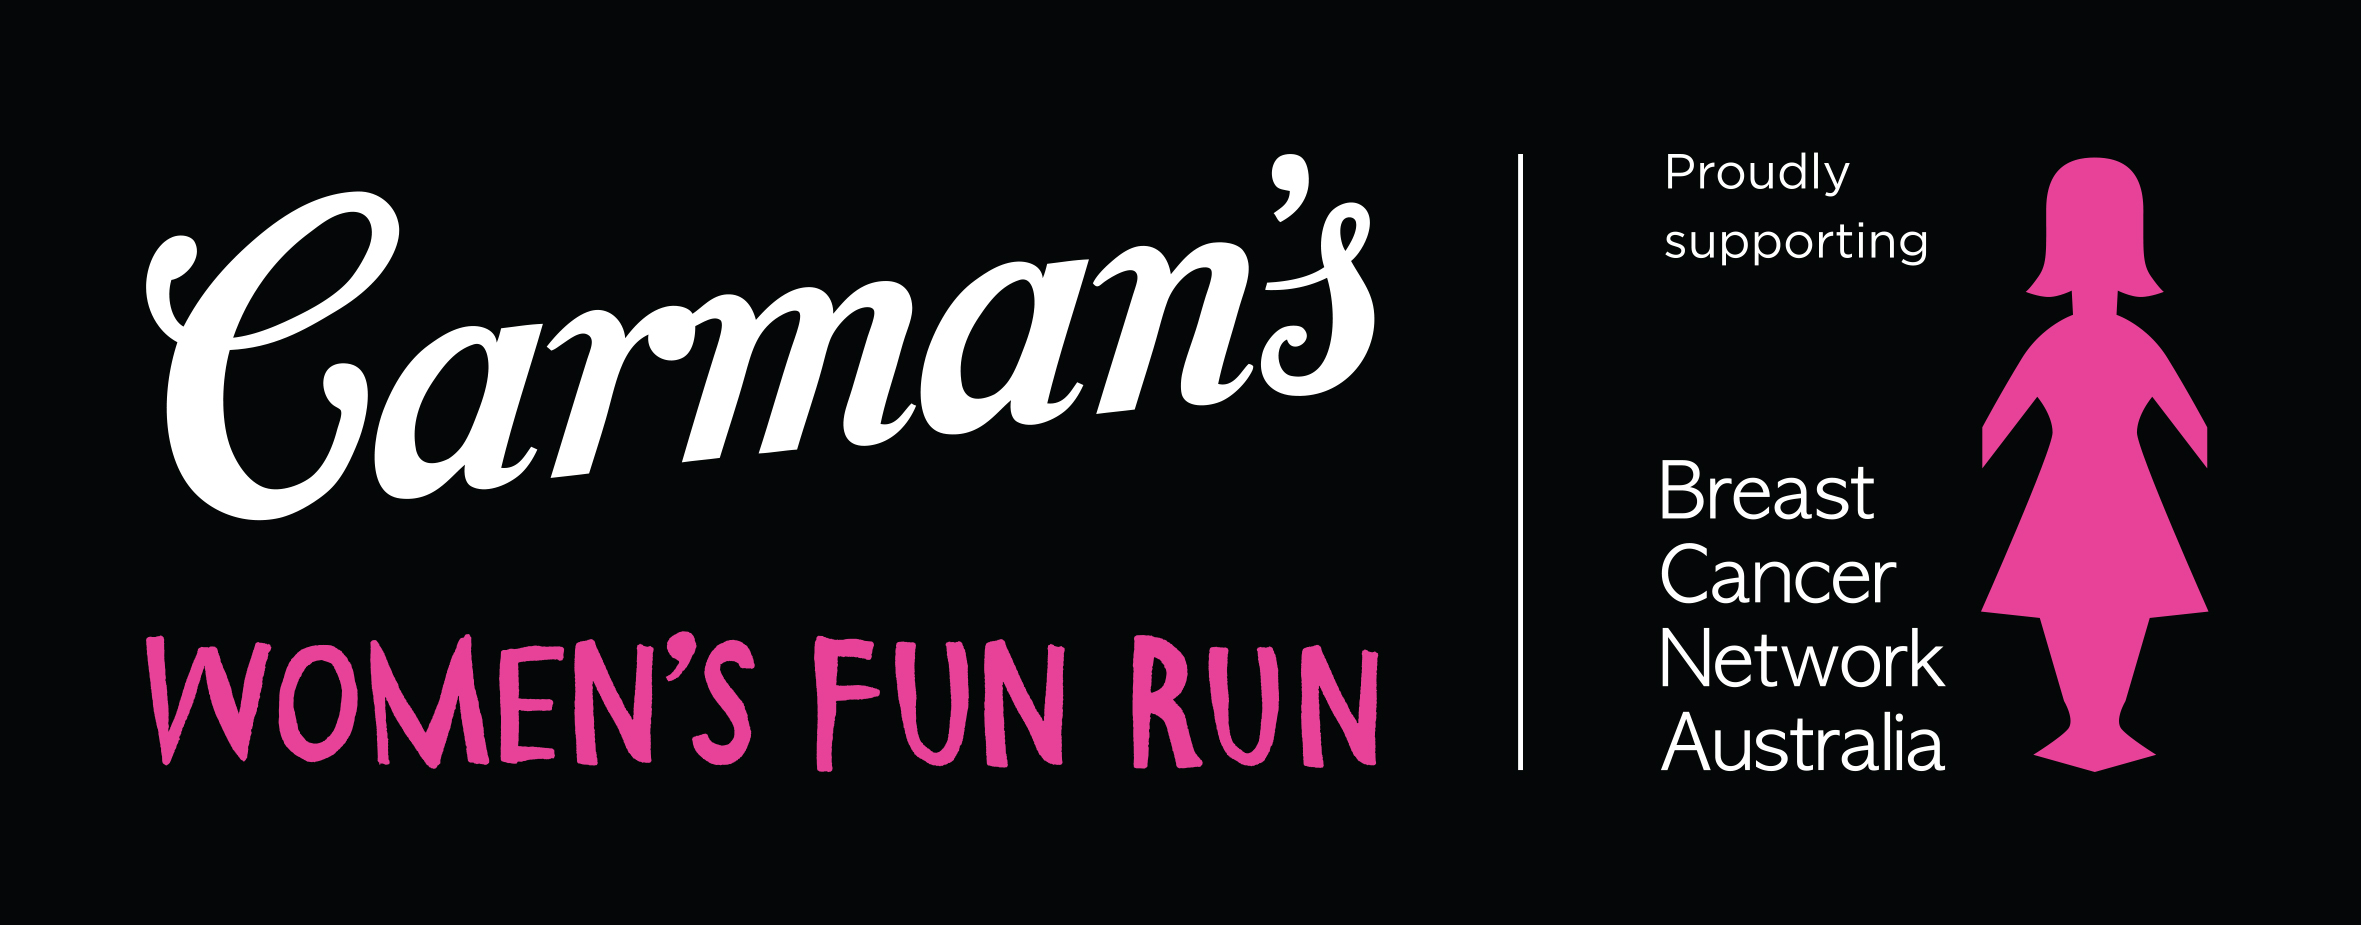 Carman's Womens Fun Run Logo